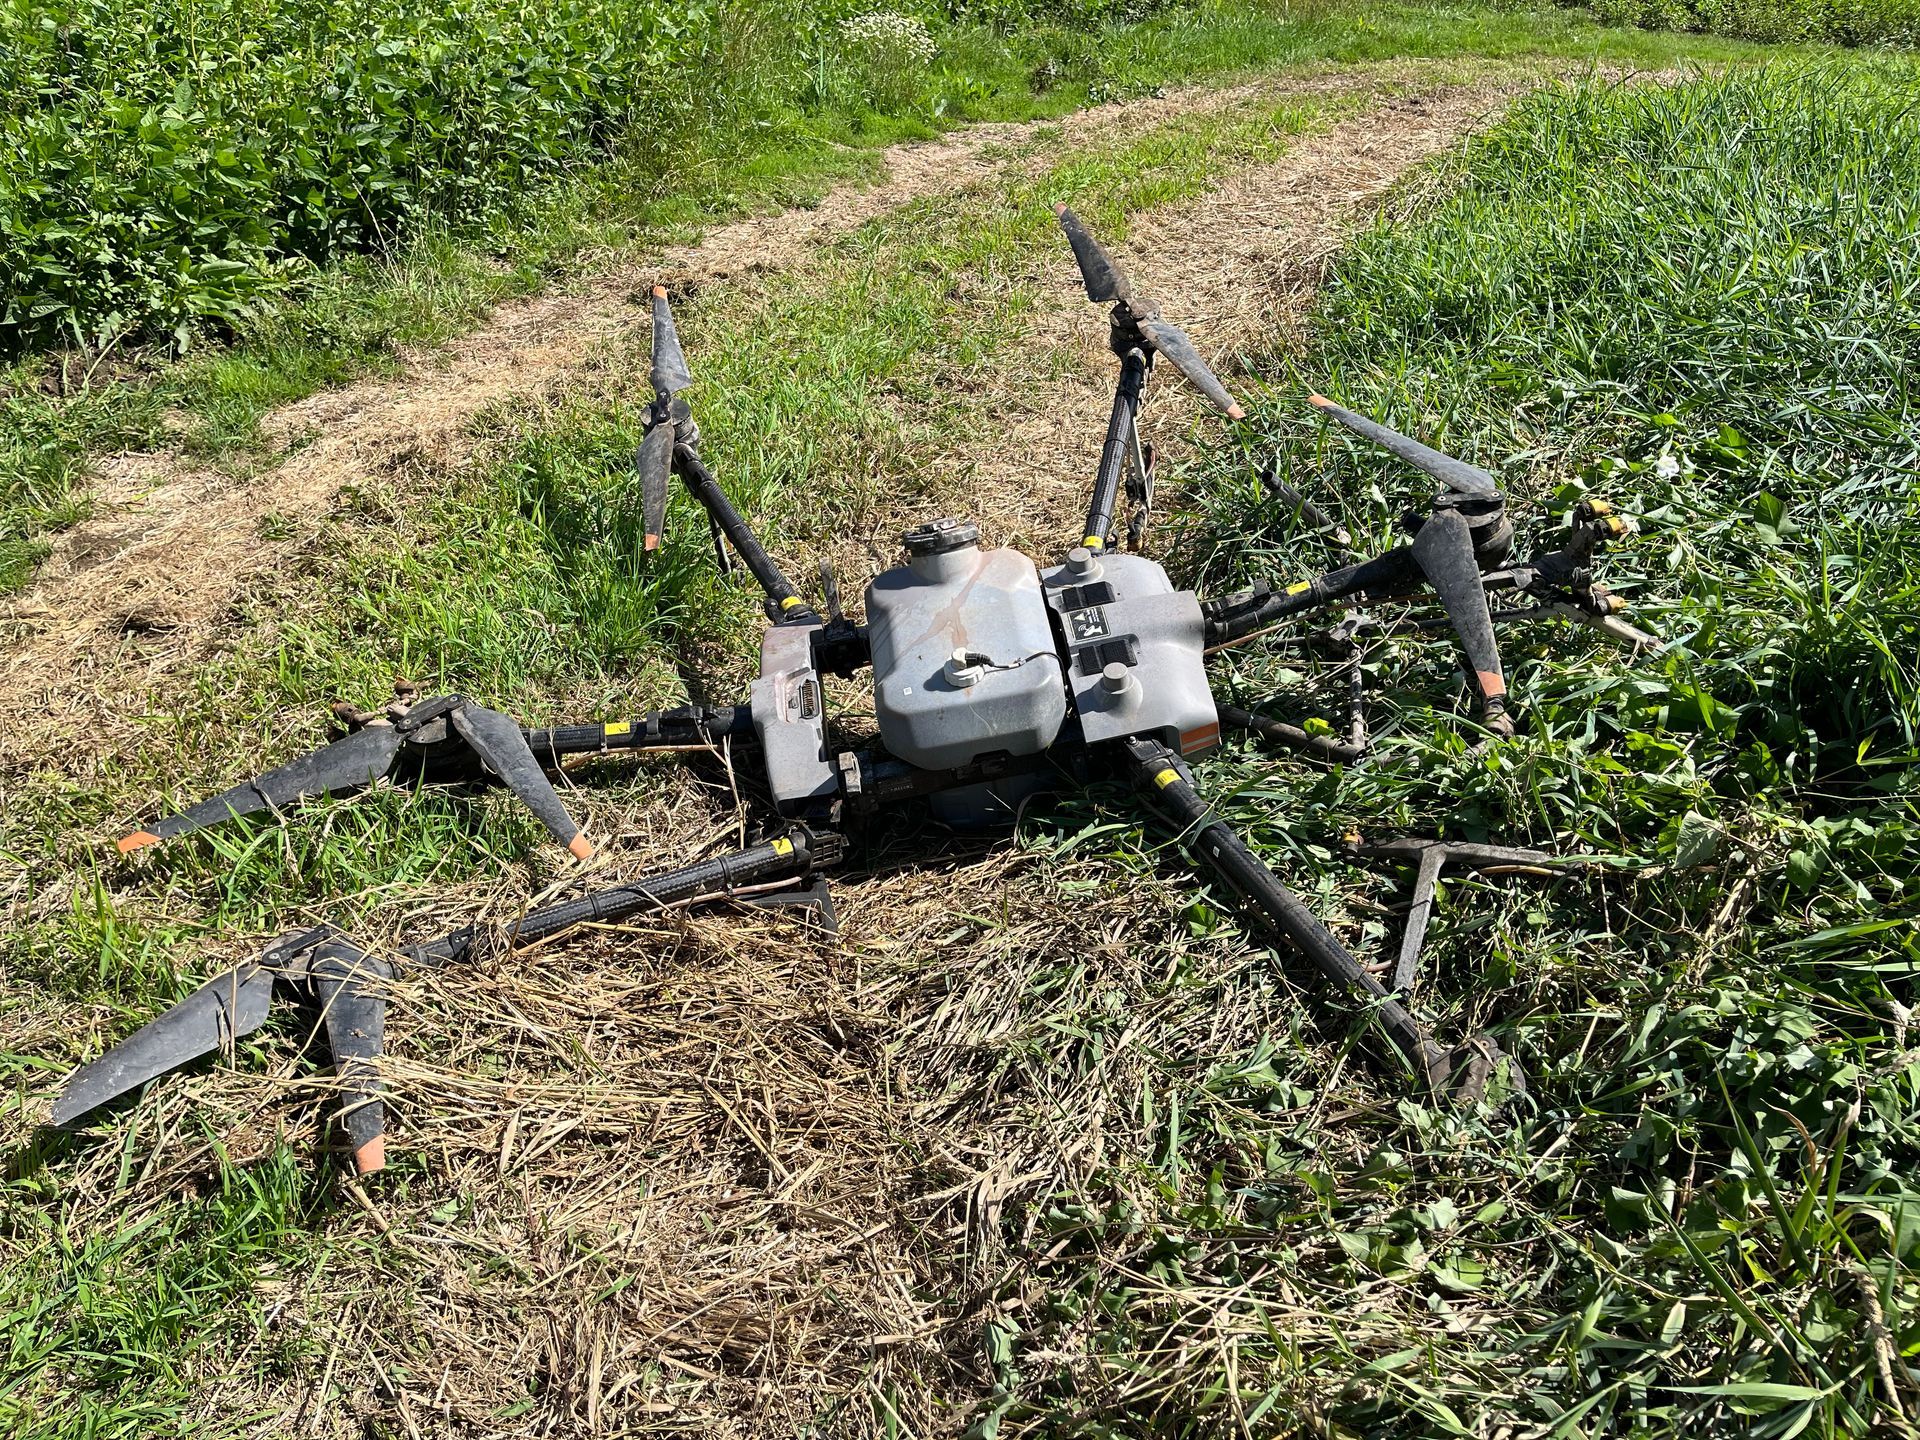 Damaged drone after a crash.